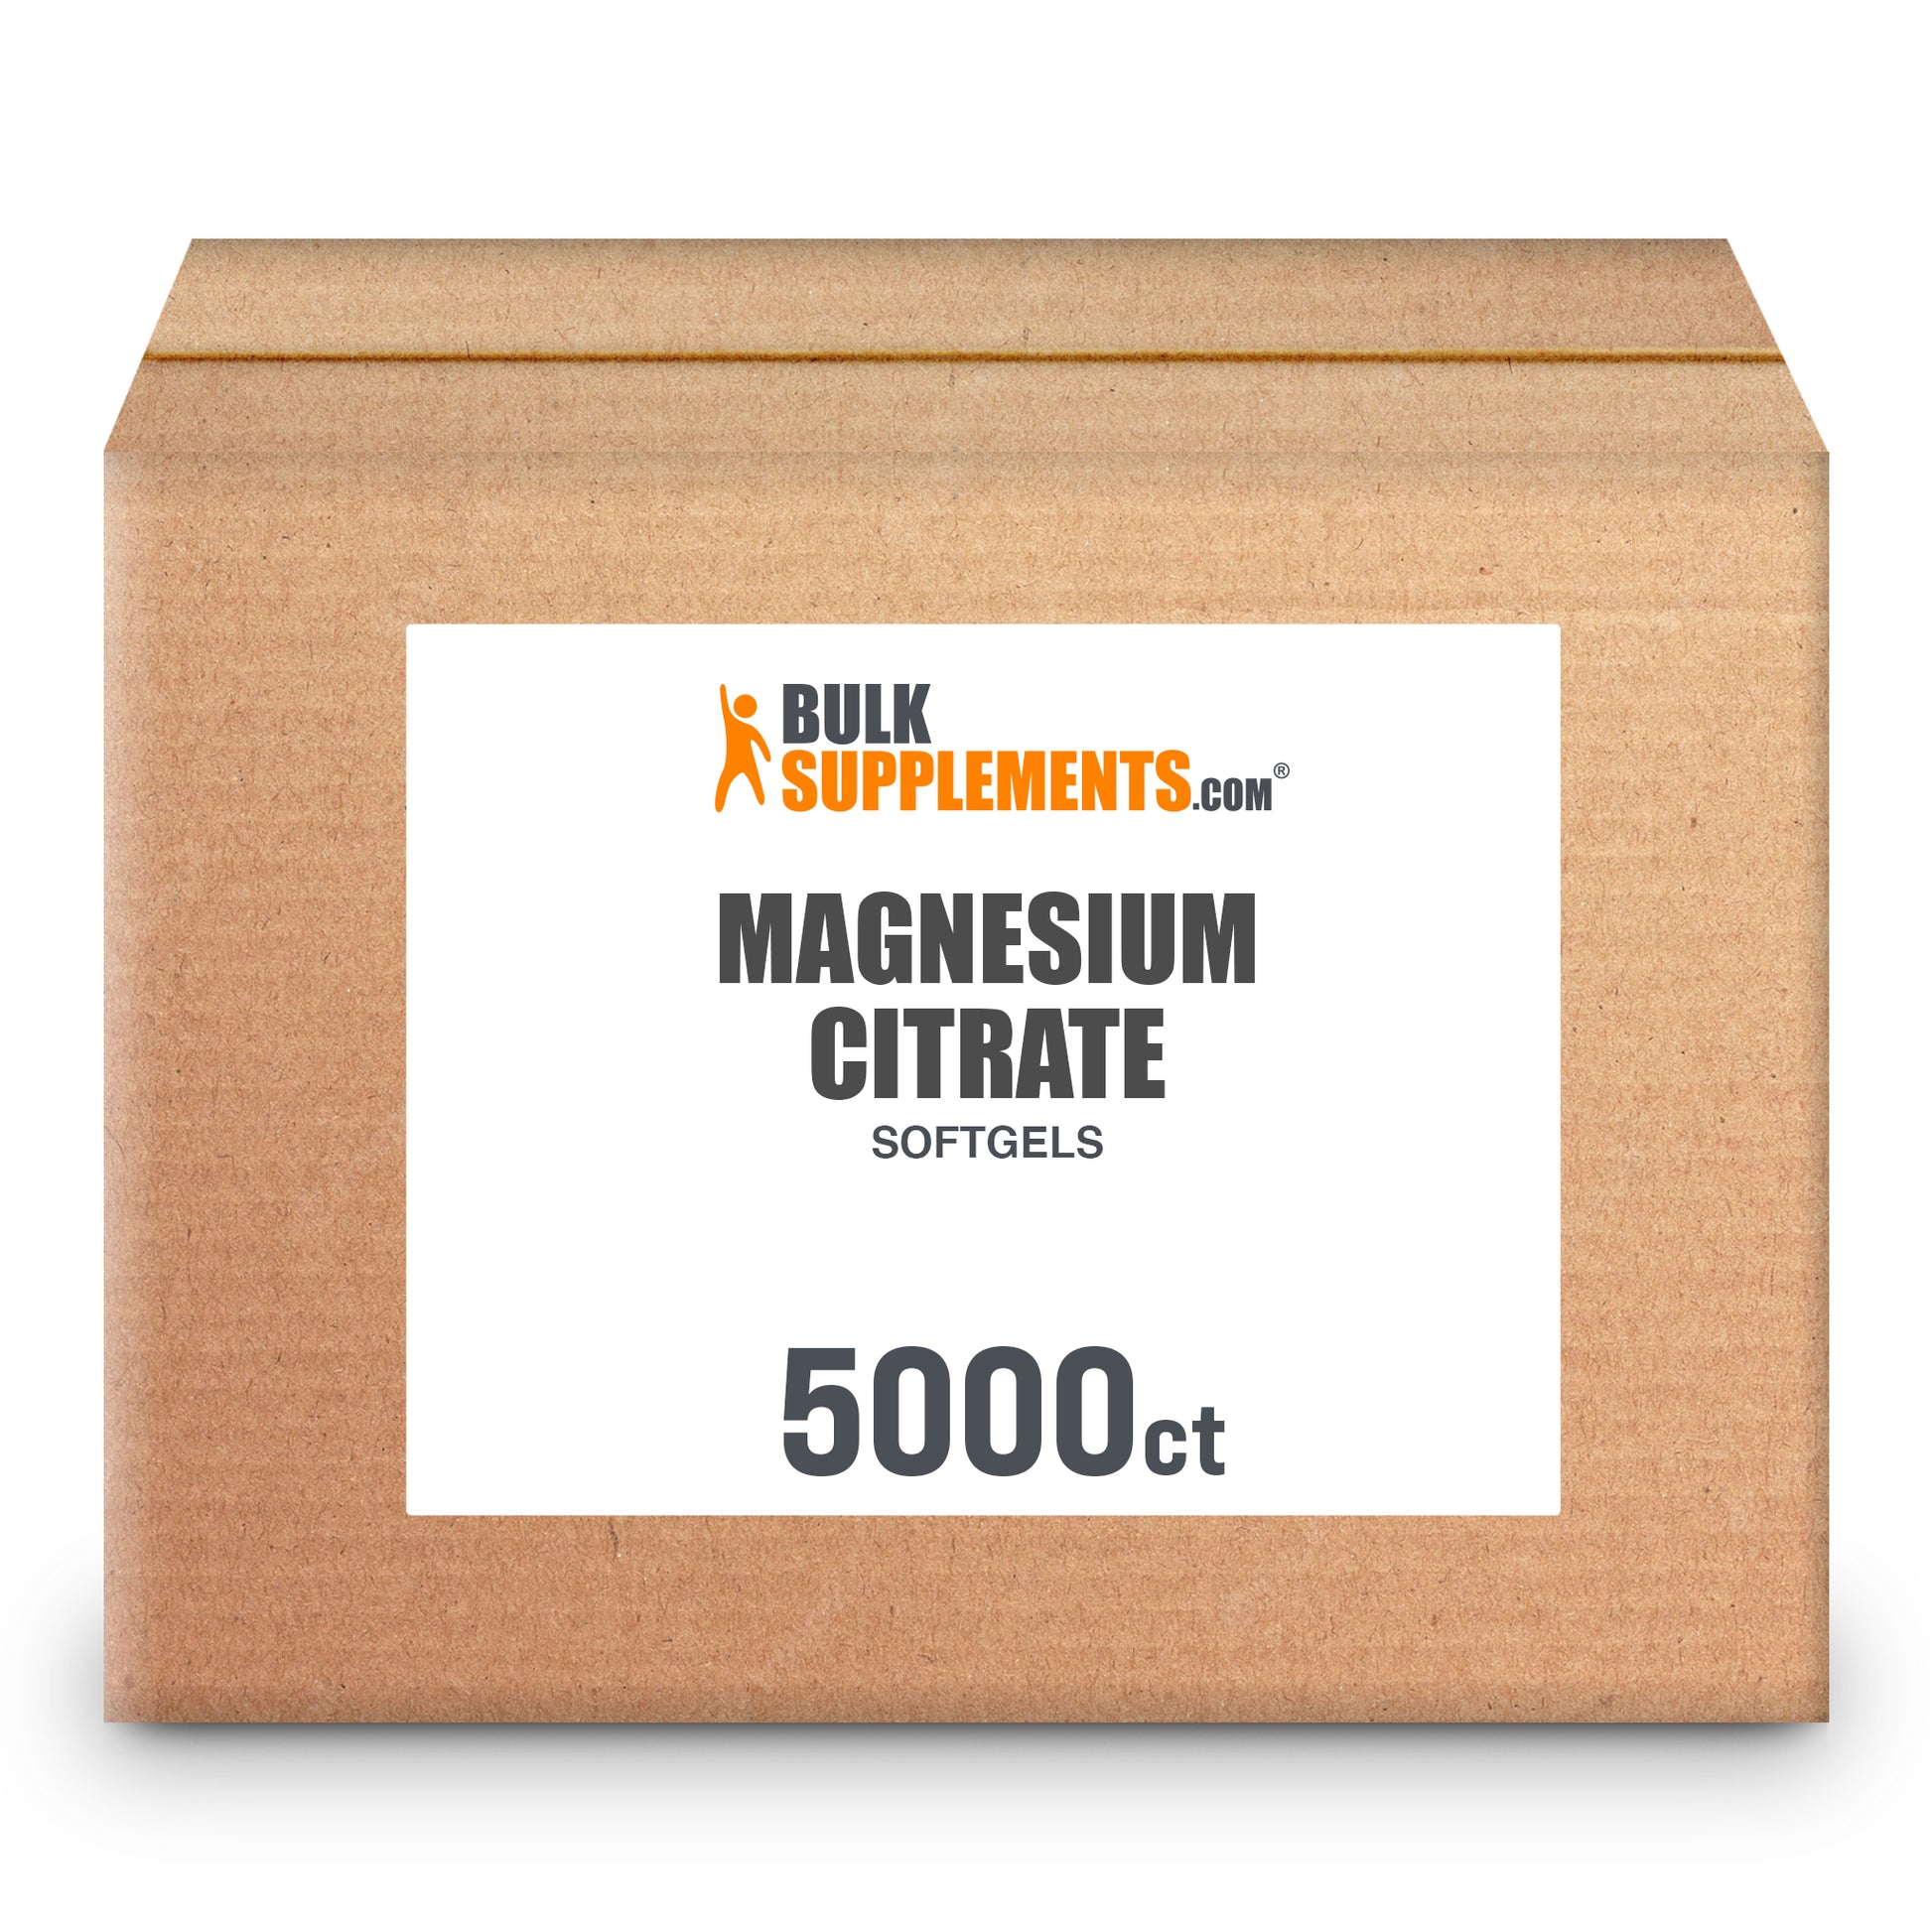 Magnesium Citrate Softgels 5000 ct box